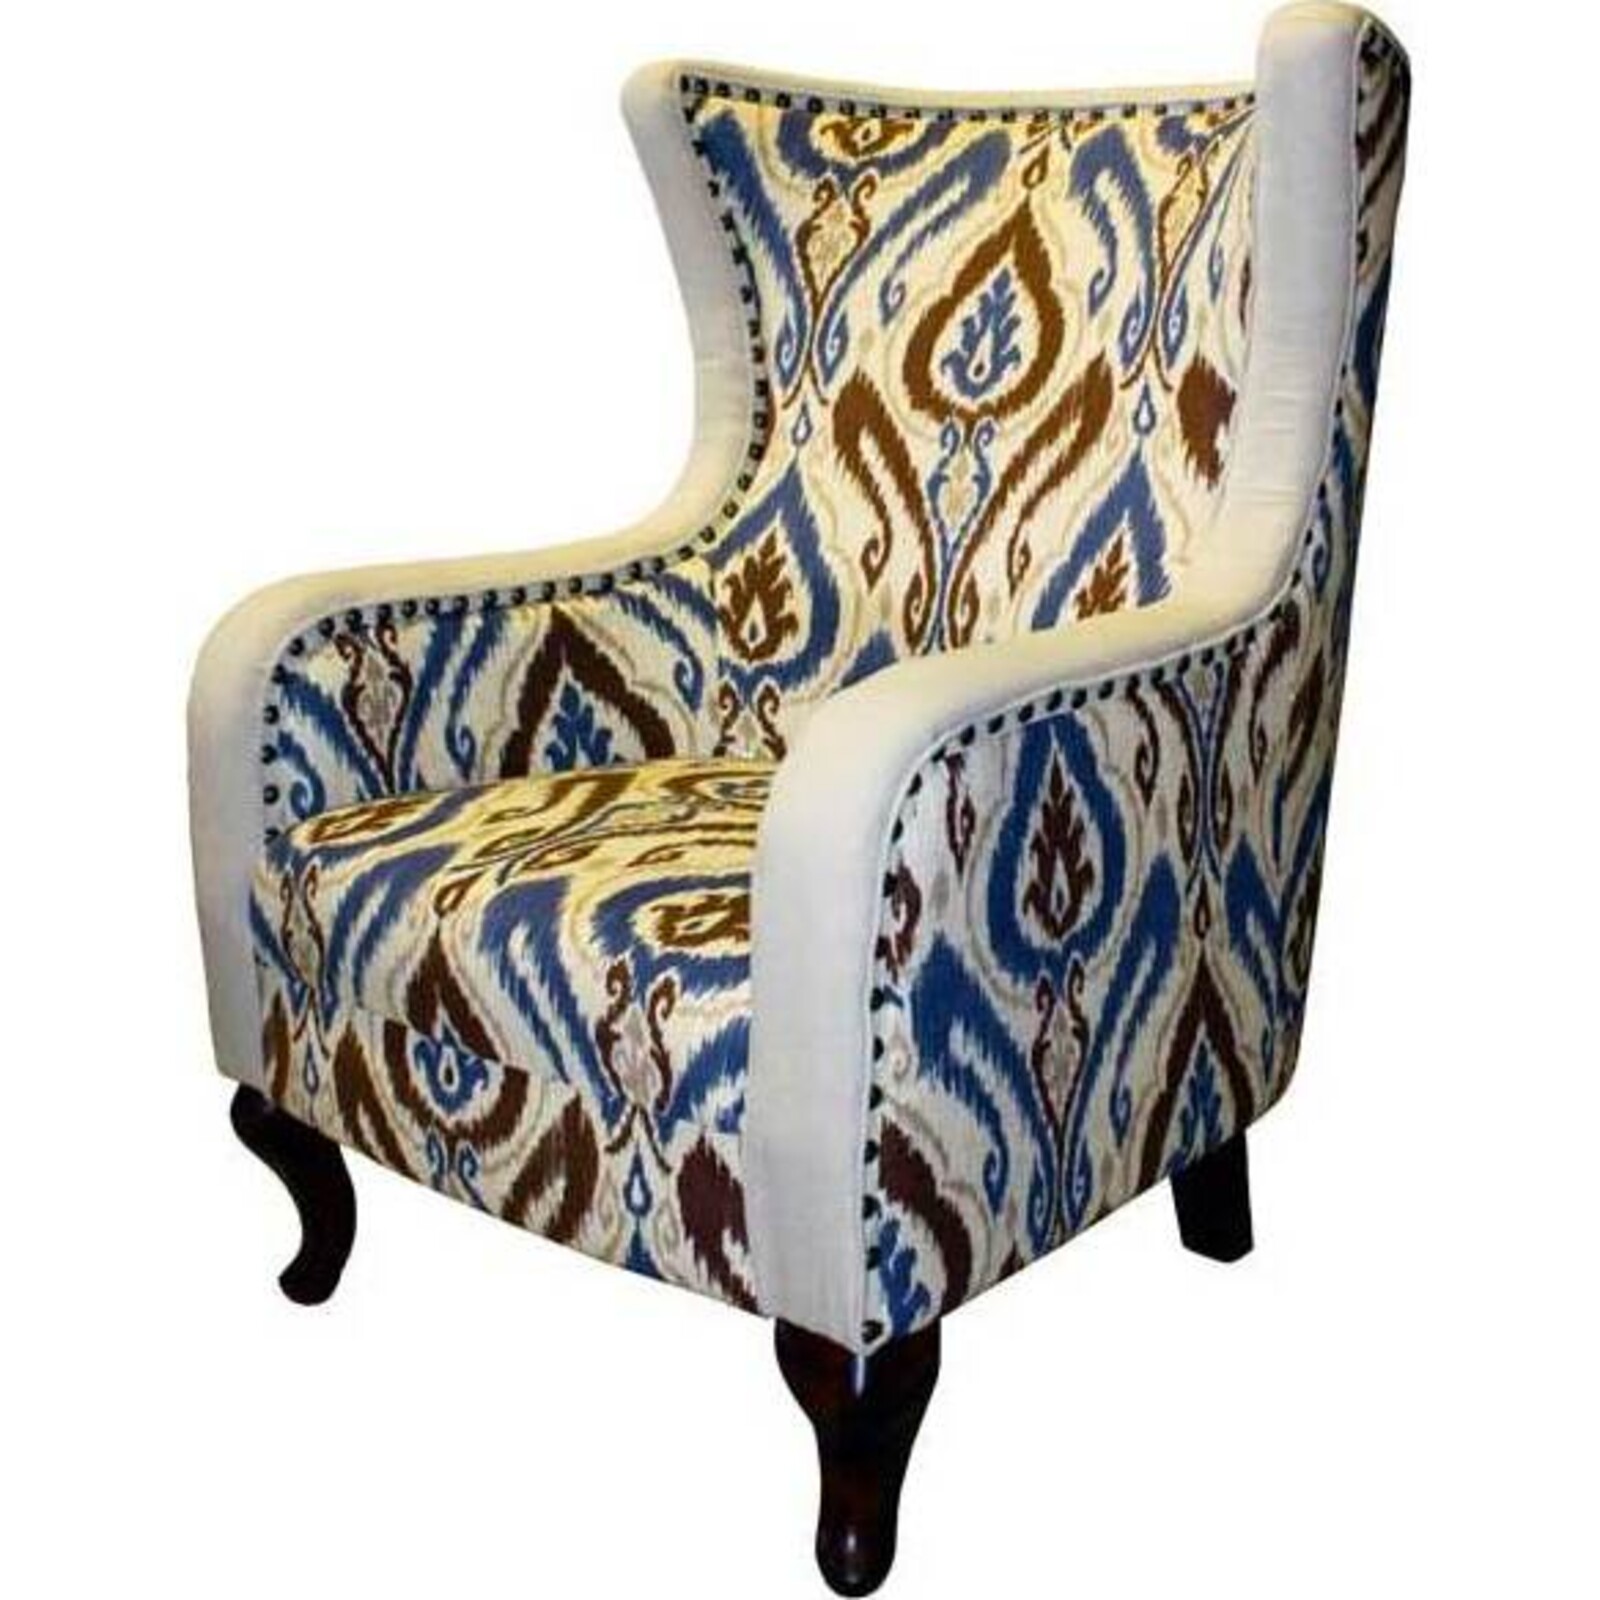 Chair - Studded Ikat ex trade fair item